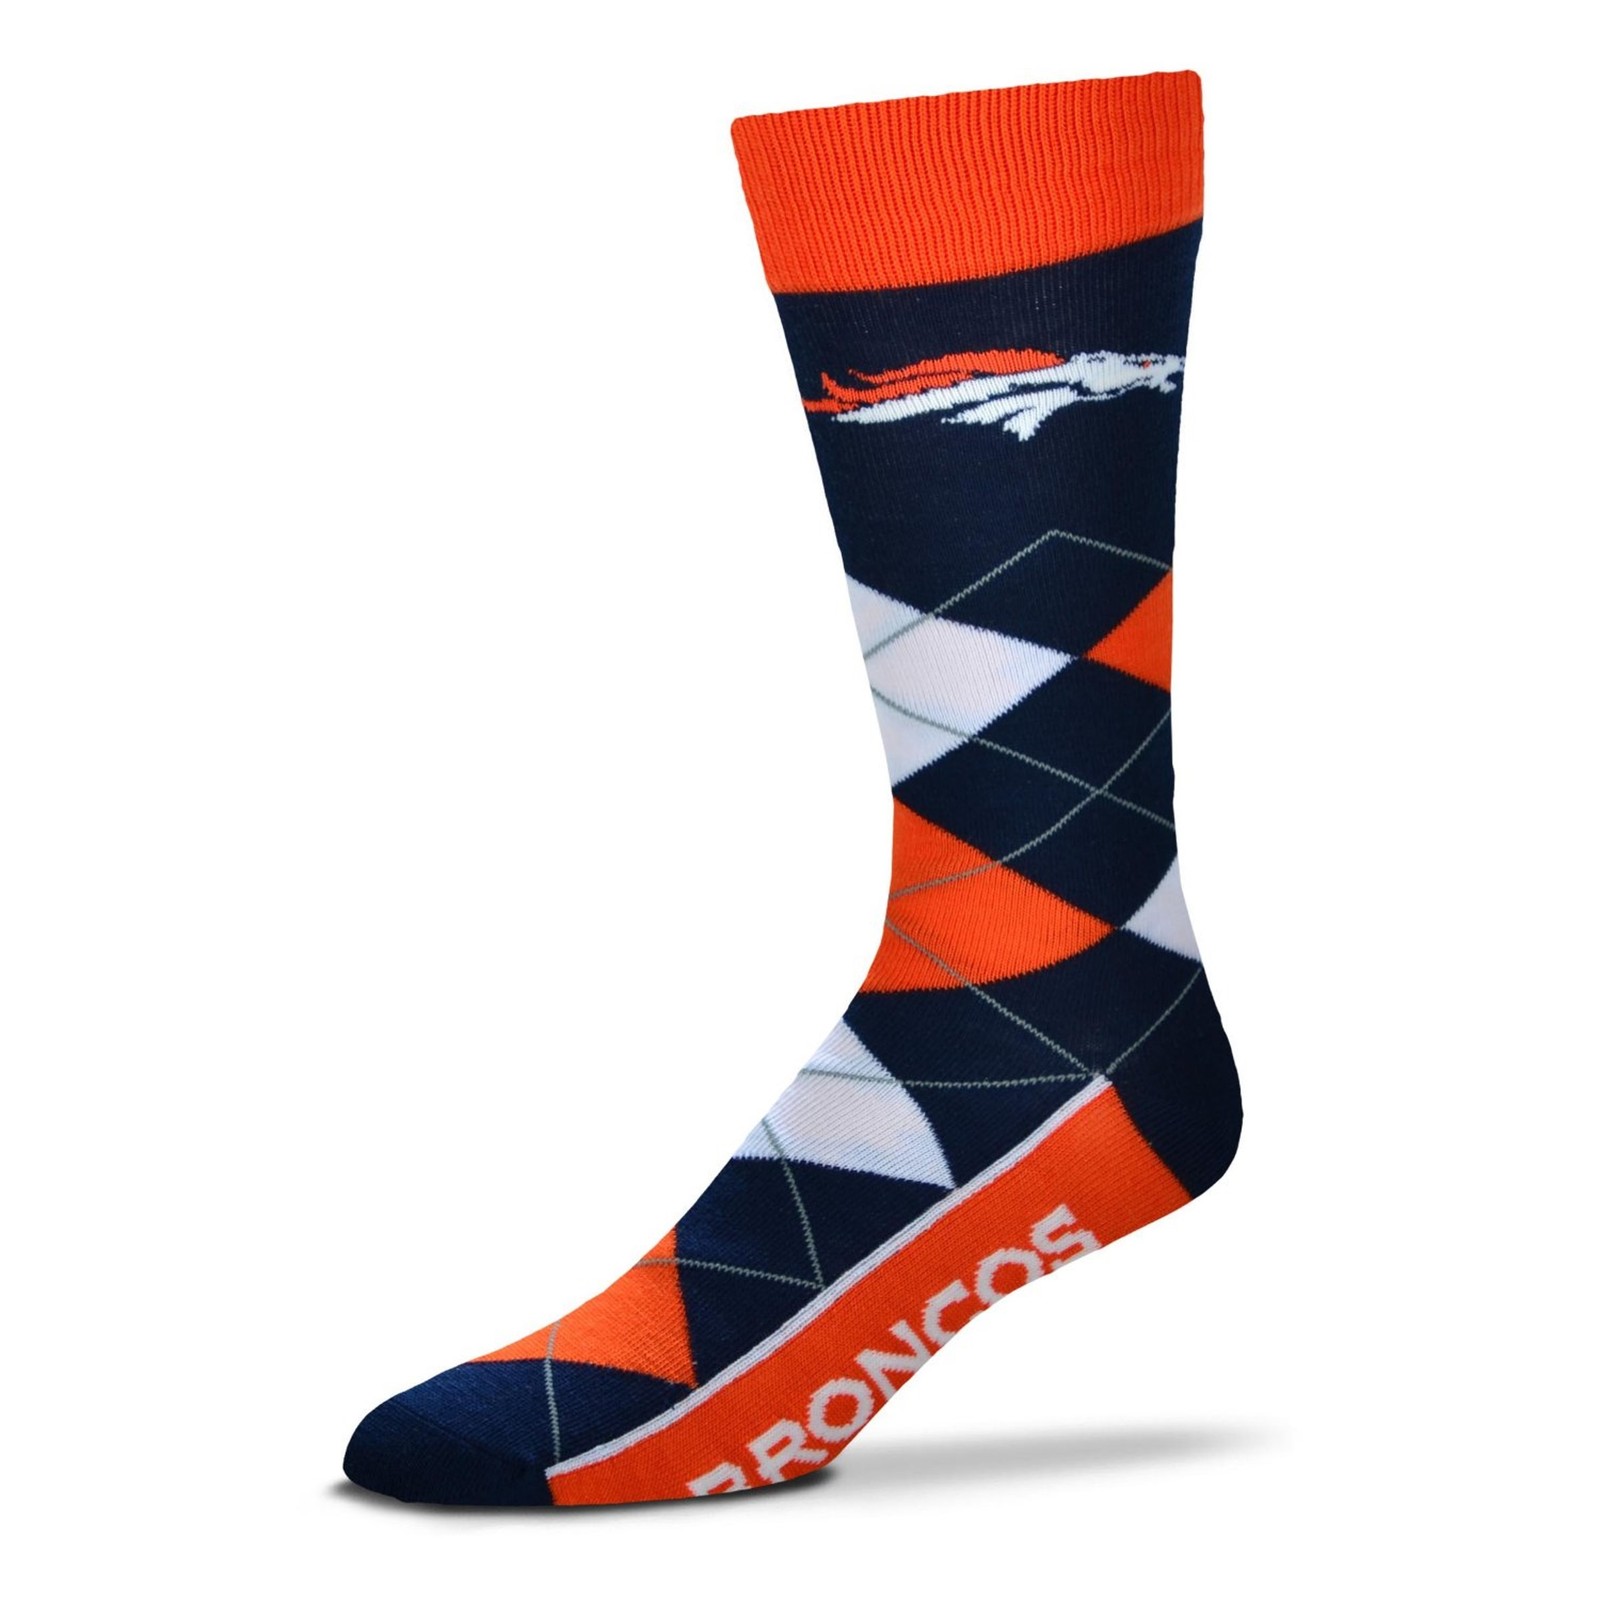 Primary image for NFL Denver Broncos Argyle Unisex Crew Cut Socks - One Size Fits Most